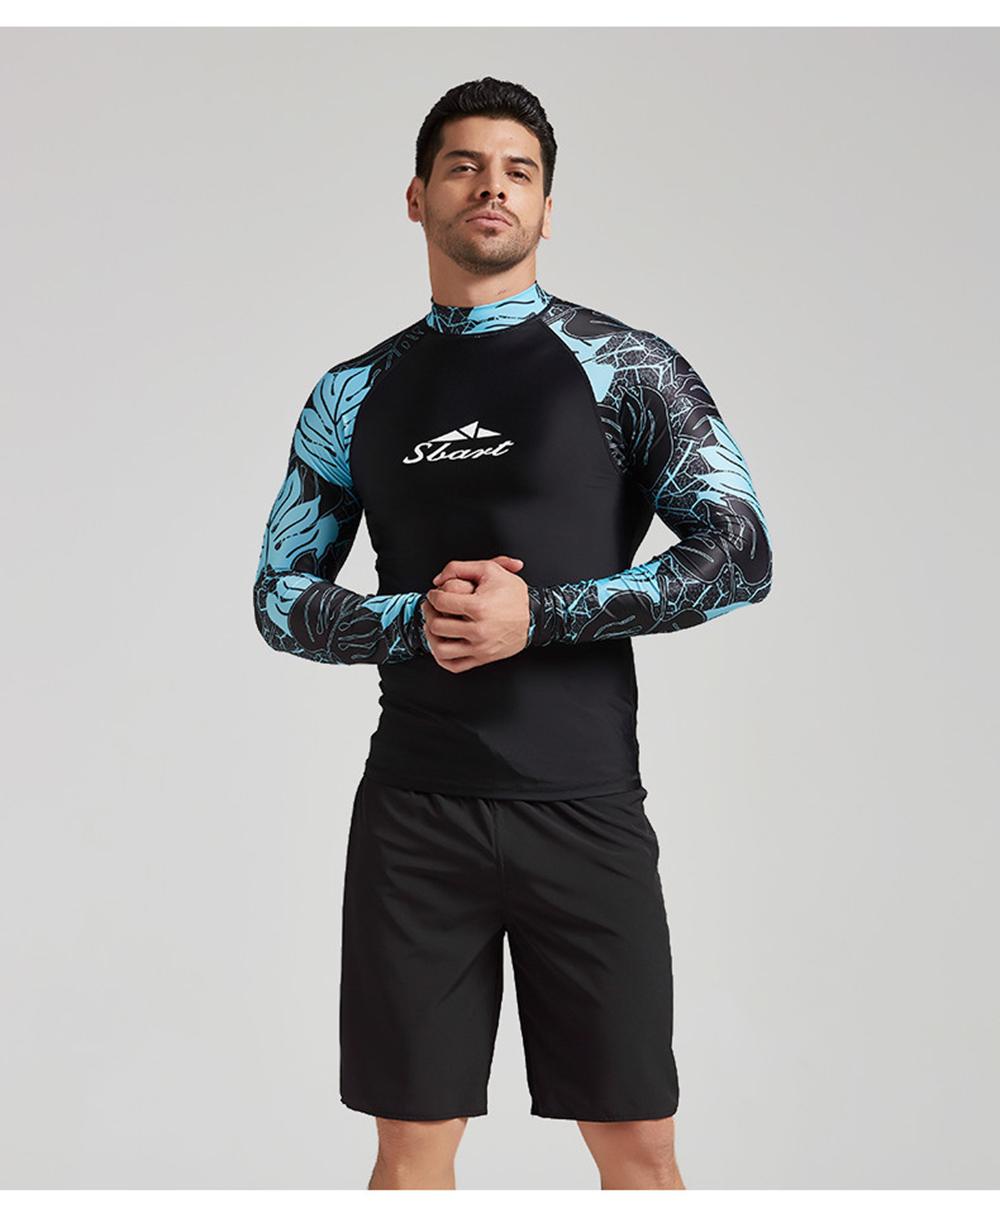 SBART Surf Wetsuit Men Swimwear Short Sleeve T-shirt Swimming Diving Suit Tops 